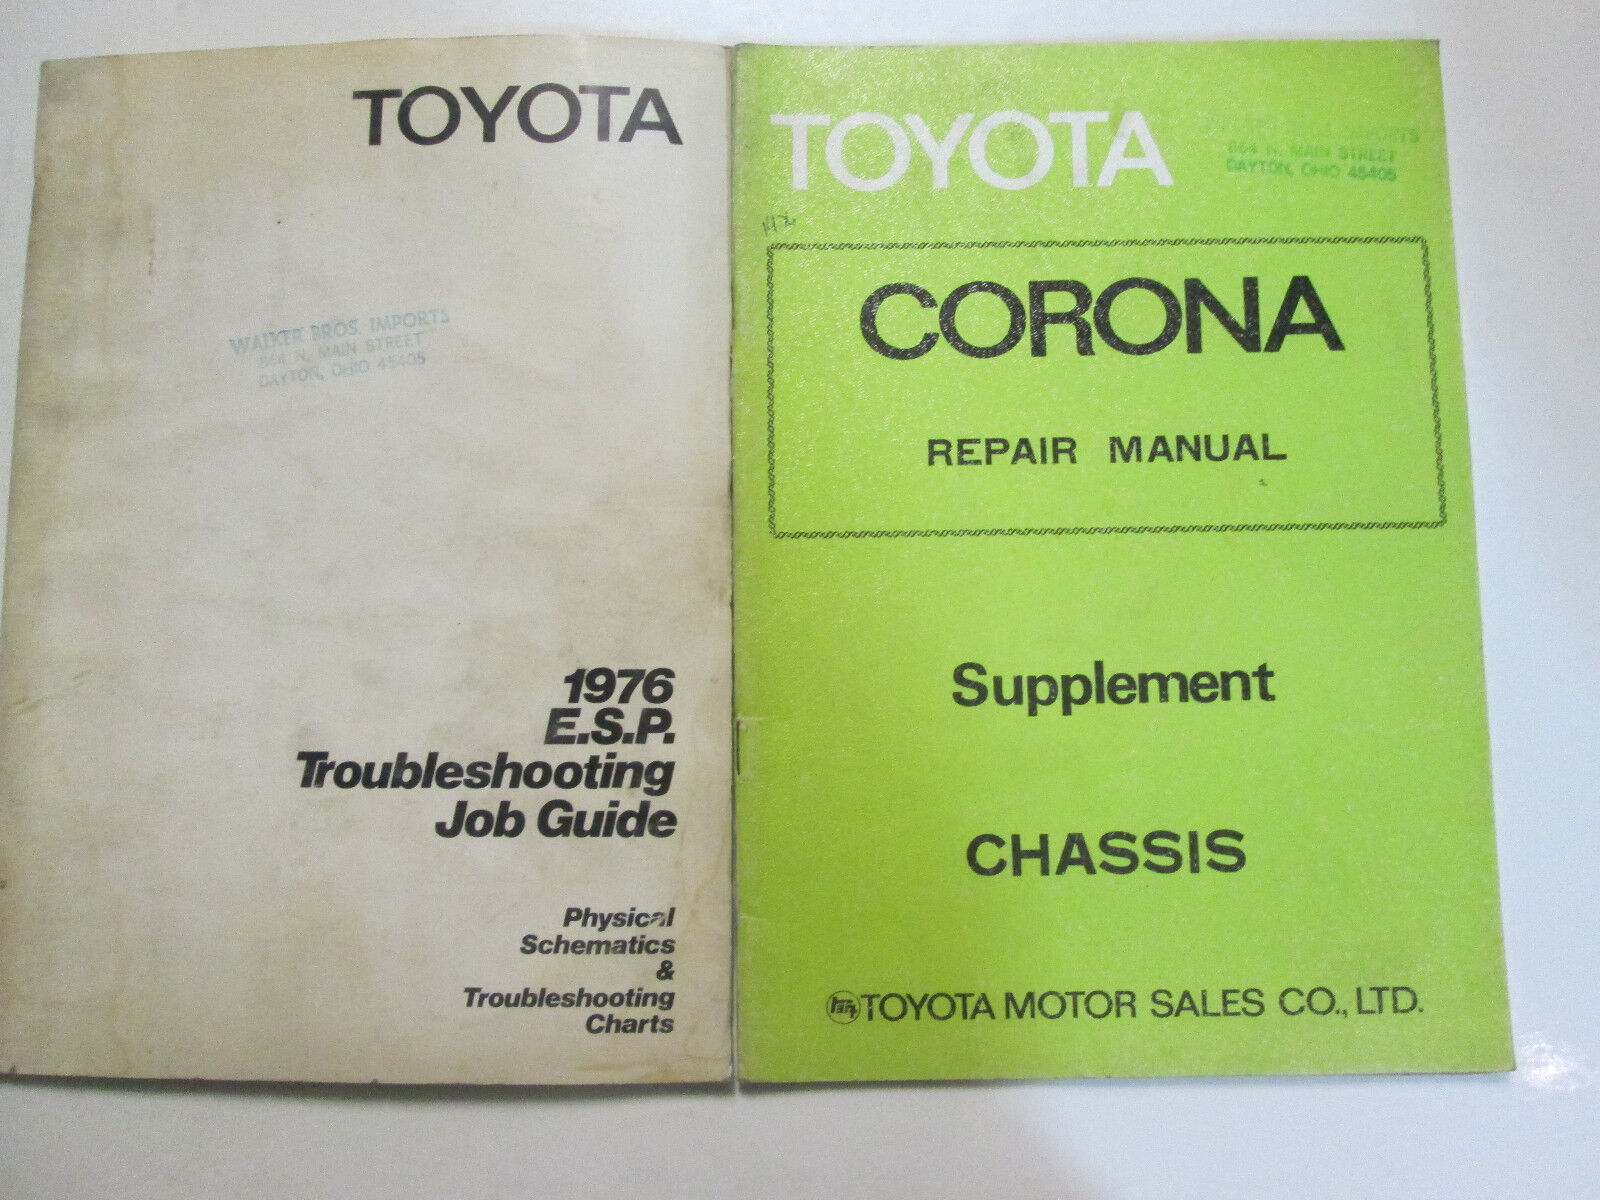 1976 Toyota ESR Troubleshooting Job Guide Set Factory Books OEM Used - $17.99